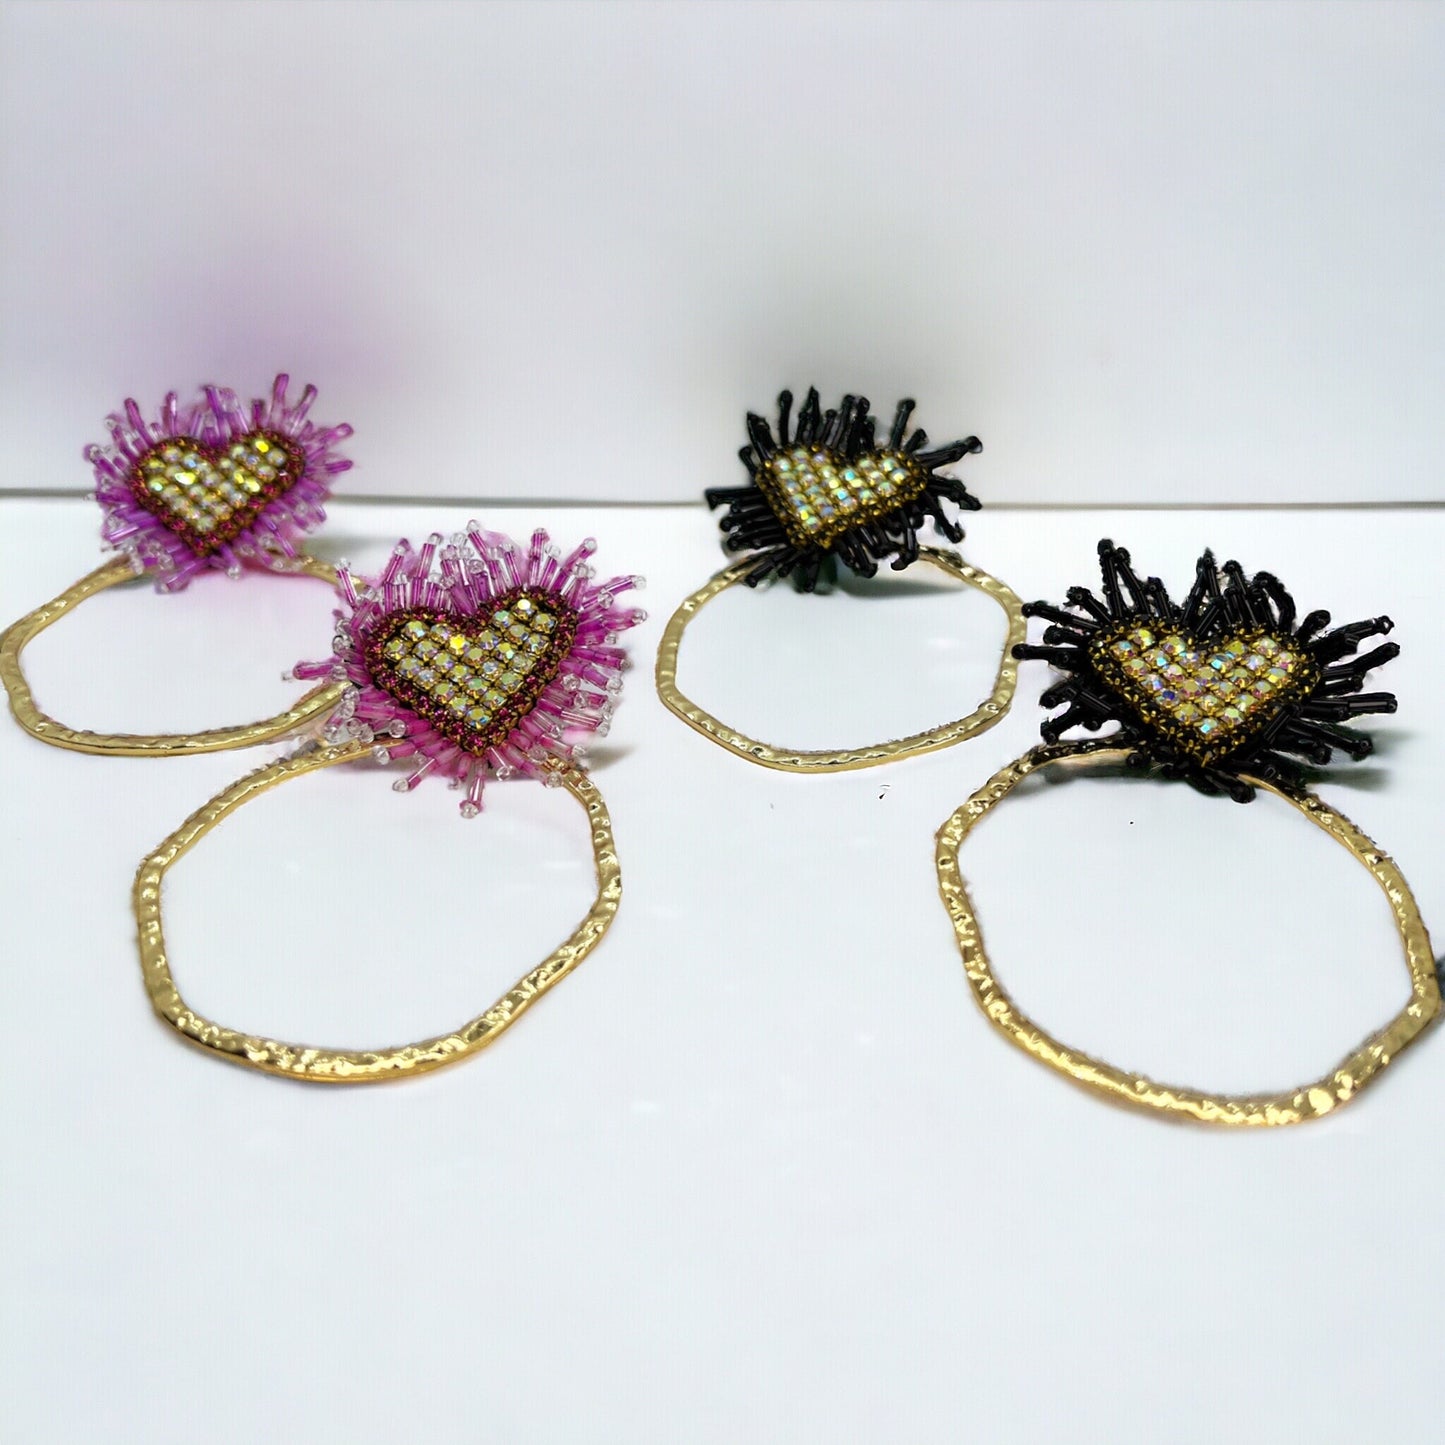 Beaded Heart Earrings, Beade Earrings, Valentine’s Earrings, Love Earrings, Heart Accessories, Easter Earrings, Beaded Accessories, Black